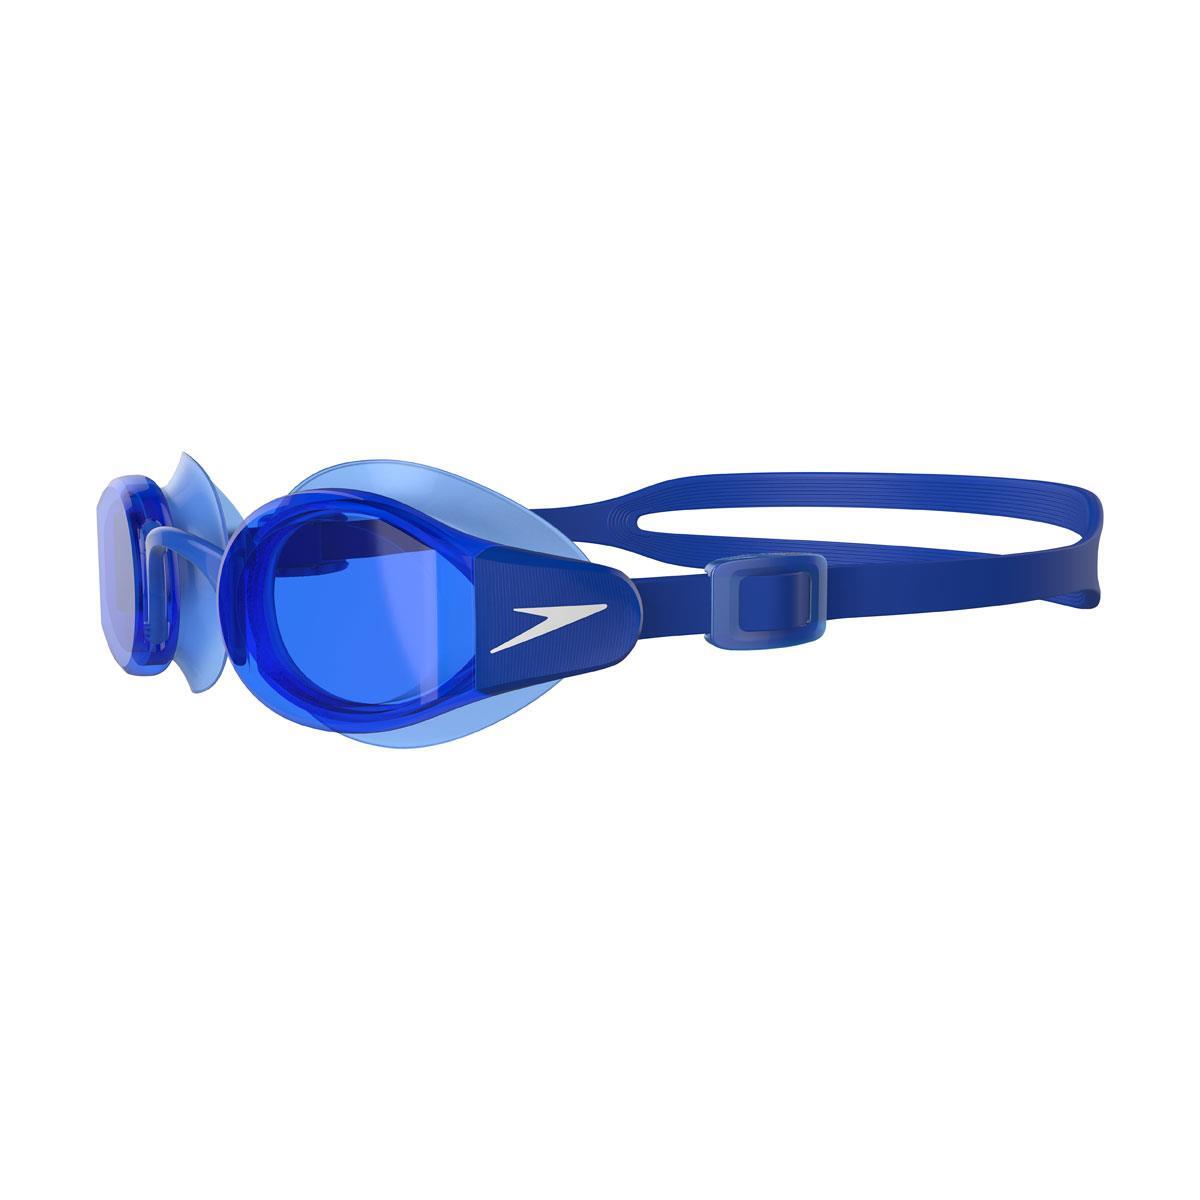 Speedo Mariner Pro Goggles - Beautiful Blue/ Translucent/ White/ Blue 1/5